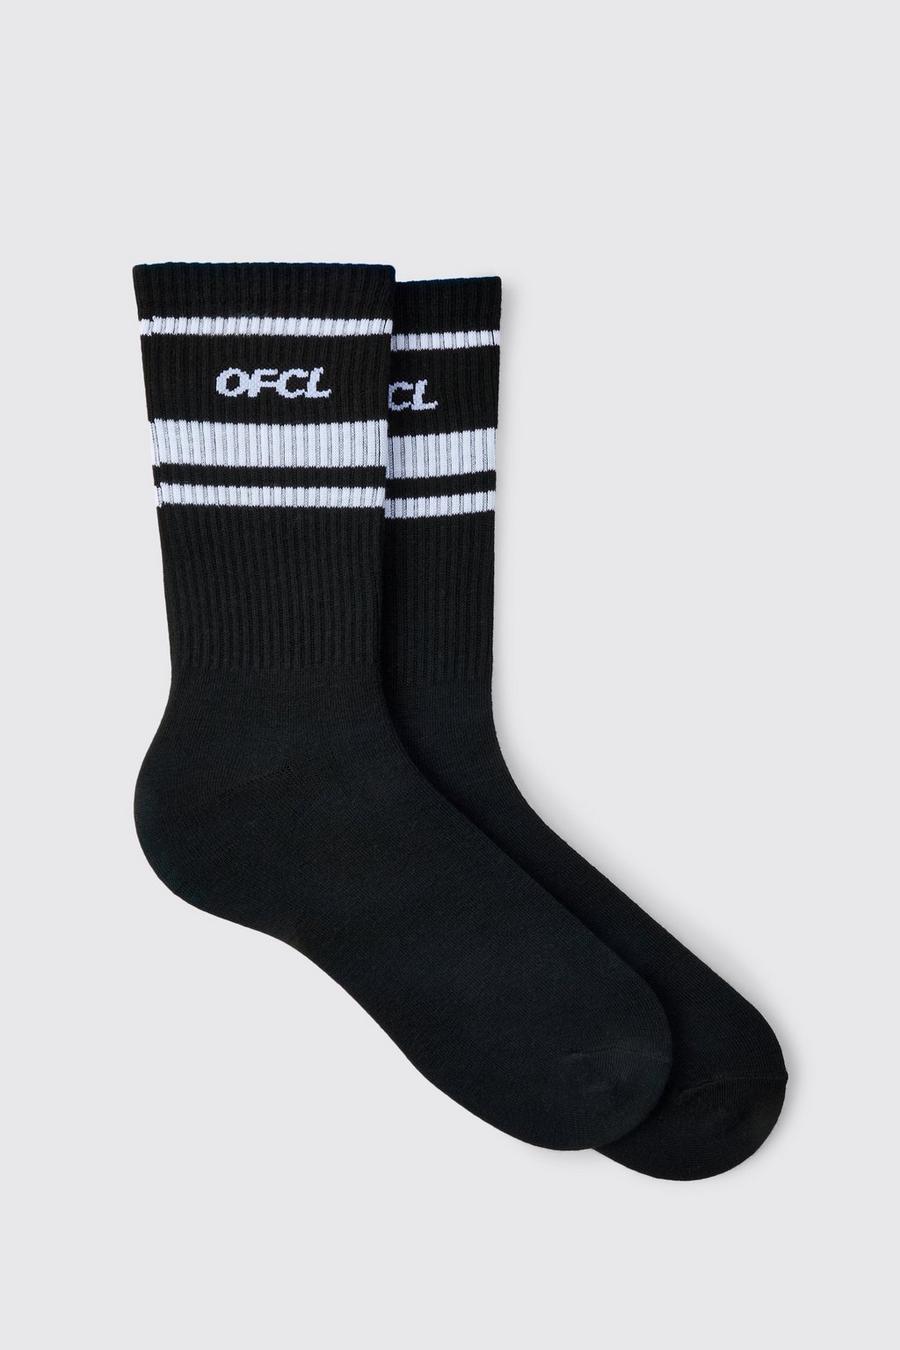 Black Ofcl Sports Stripe Socks